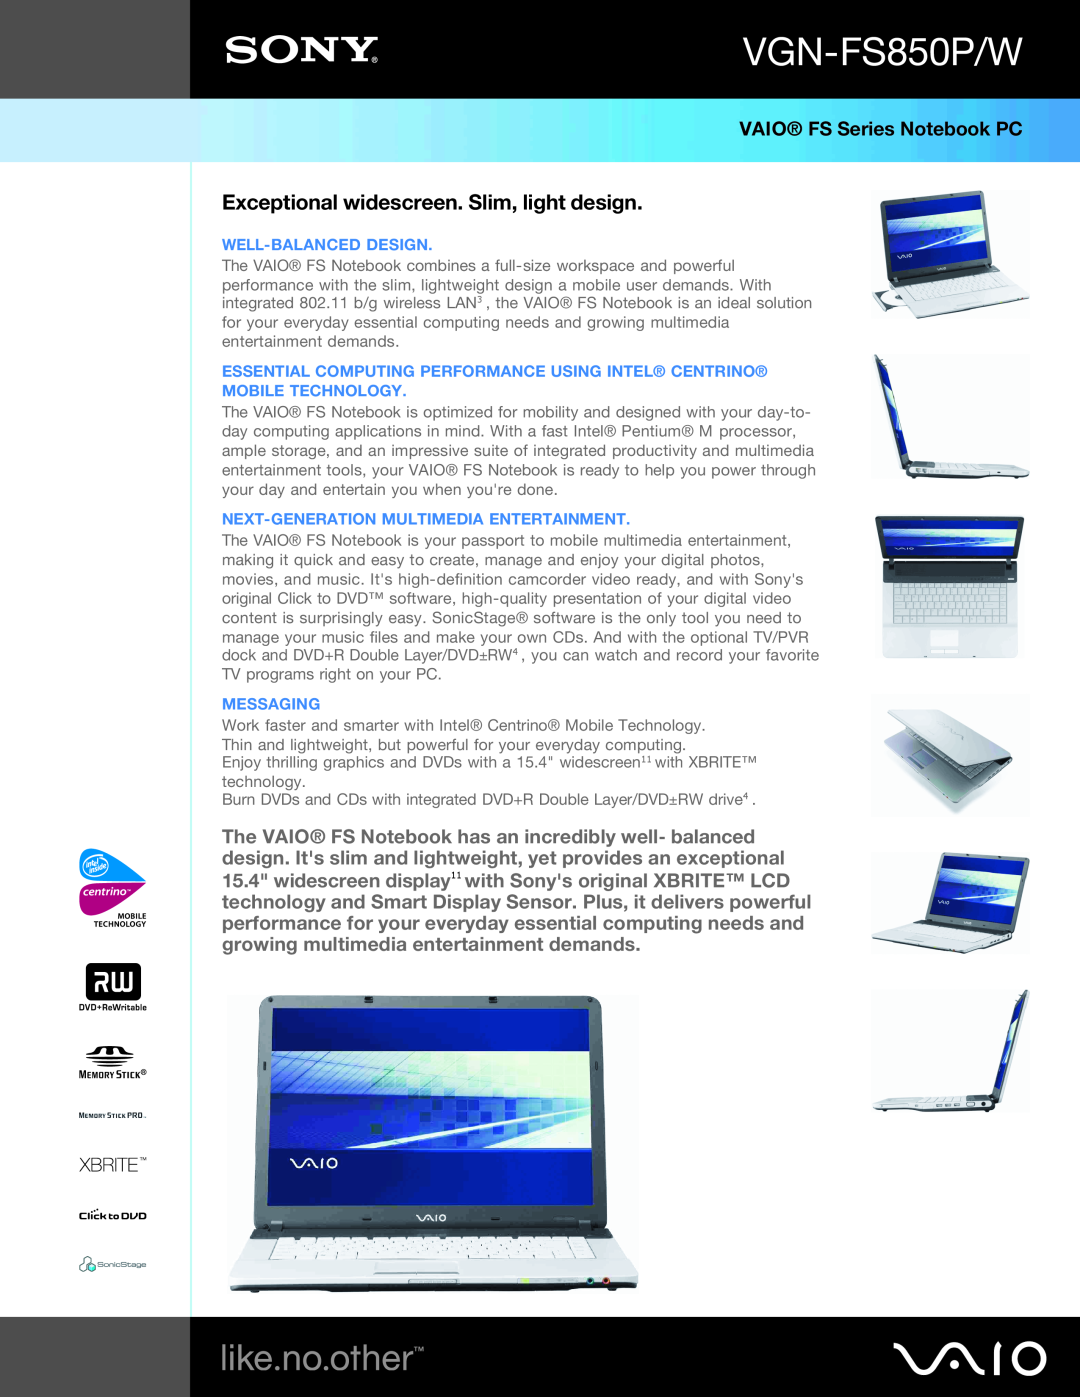 Sony VGN-FS850P/W manual VAIO FS Series Notebook PC, Exceptional widescreen. Slim, light design, Well-Balanced Design 